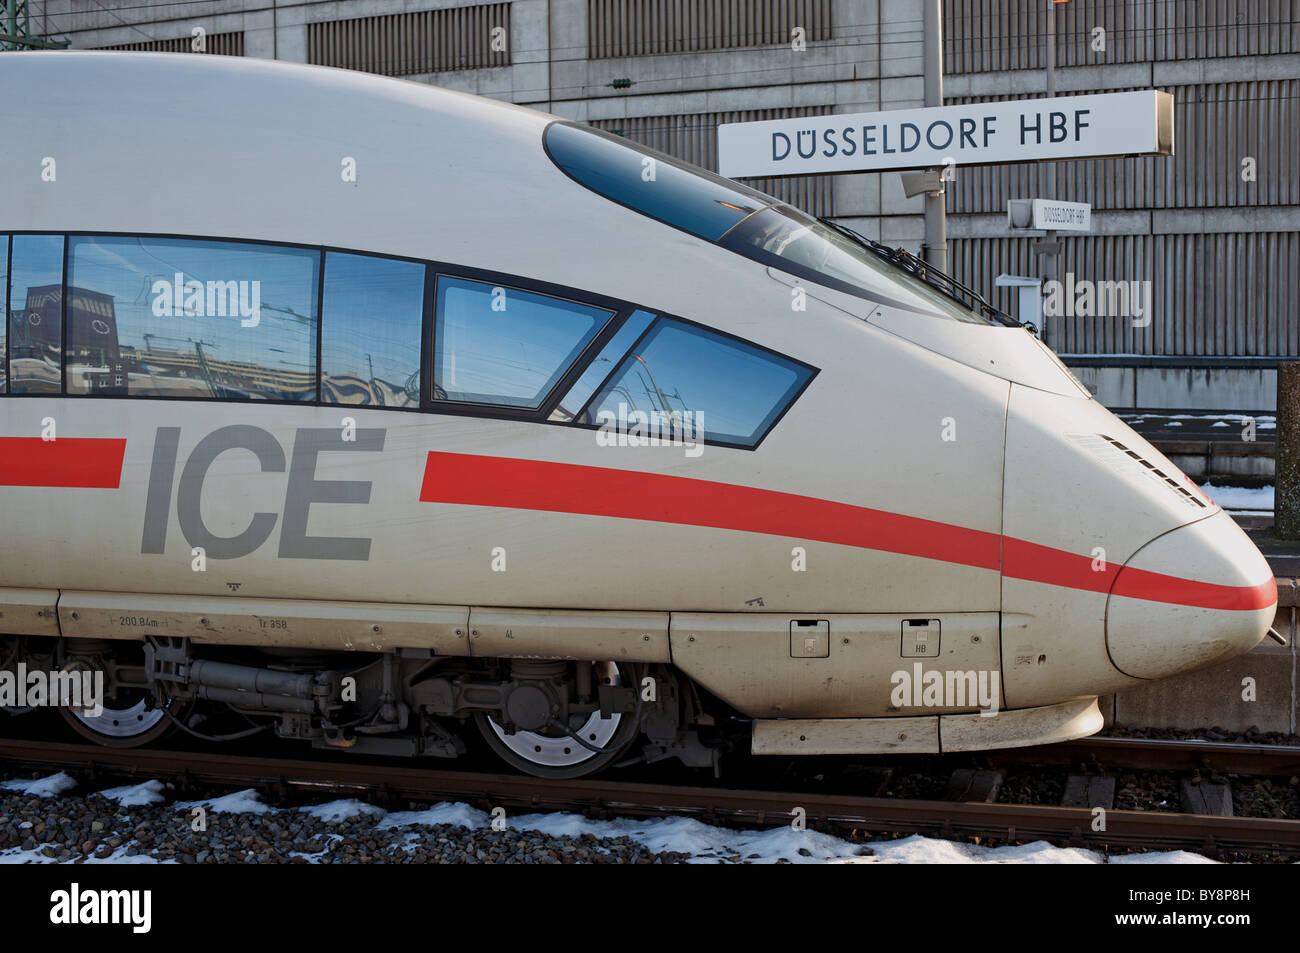 German Railways Intercity Express (ICE) Dusseldorf, Germany. Stock Photo